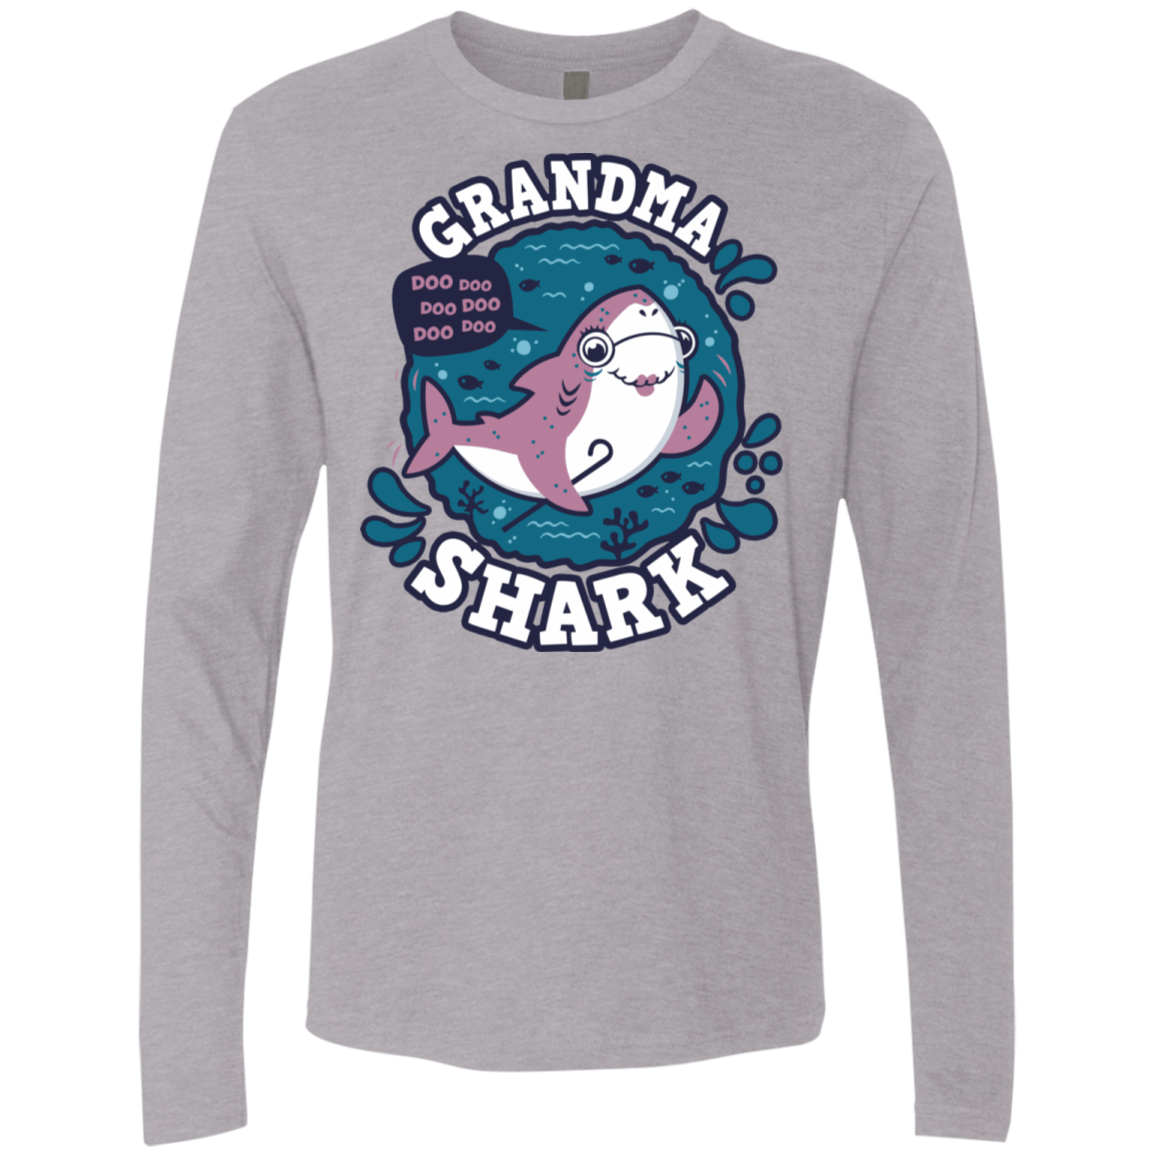 T-Shirts Heather Grey / S Shark Family trazo - Grandma Men's Premium Long Sleeve